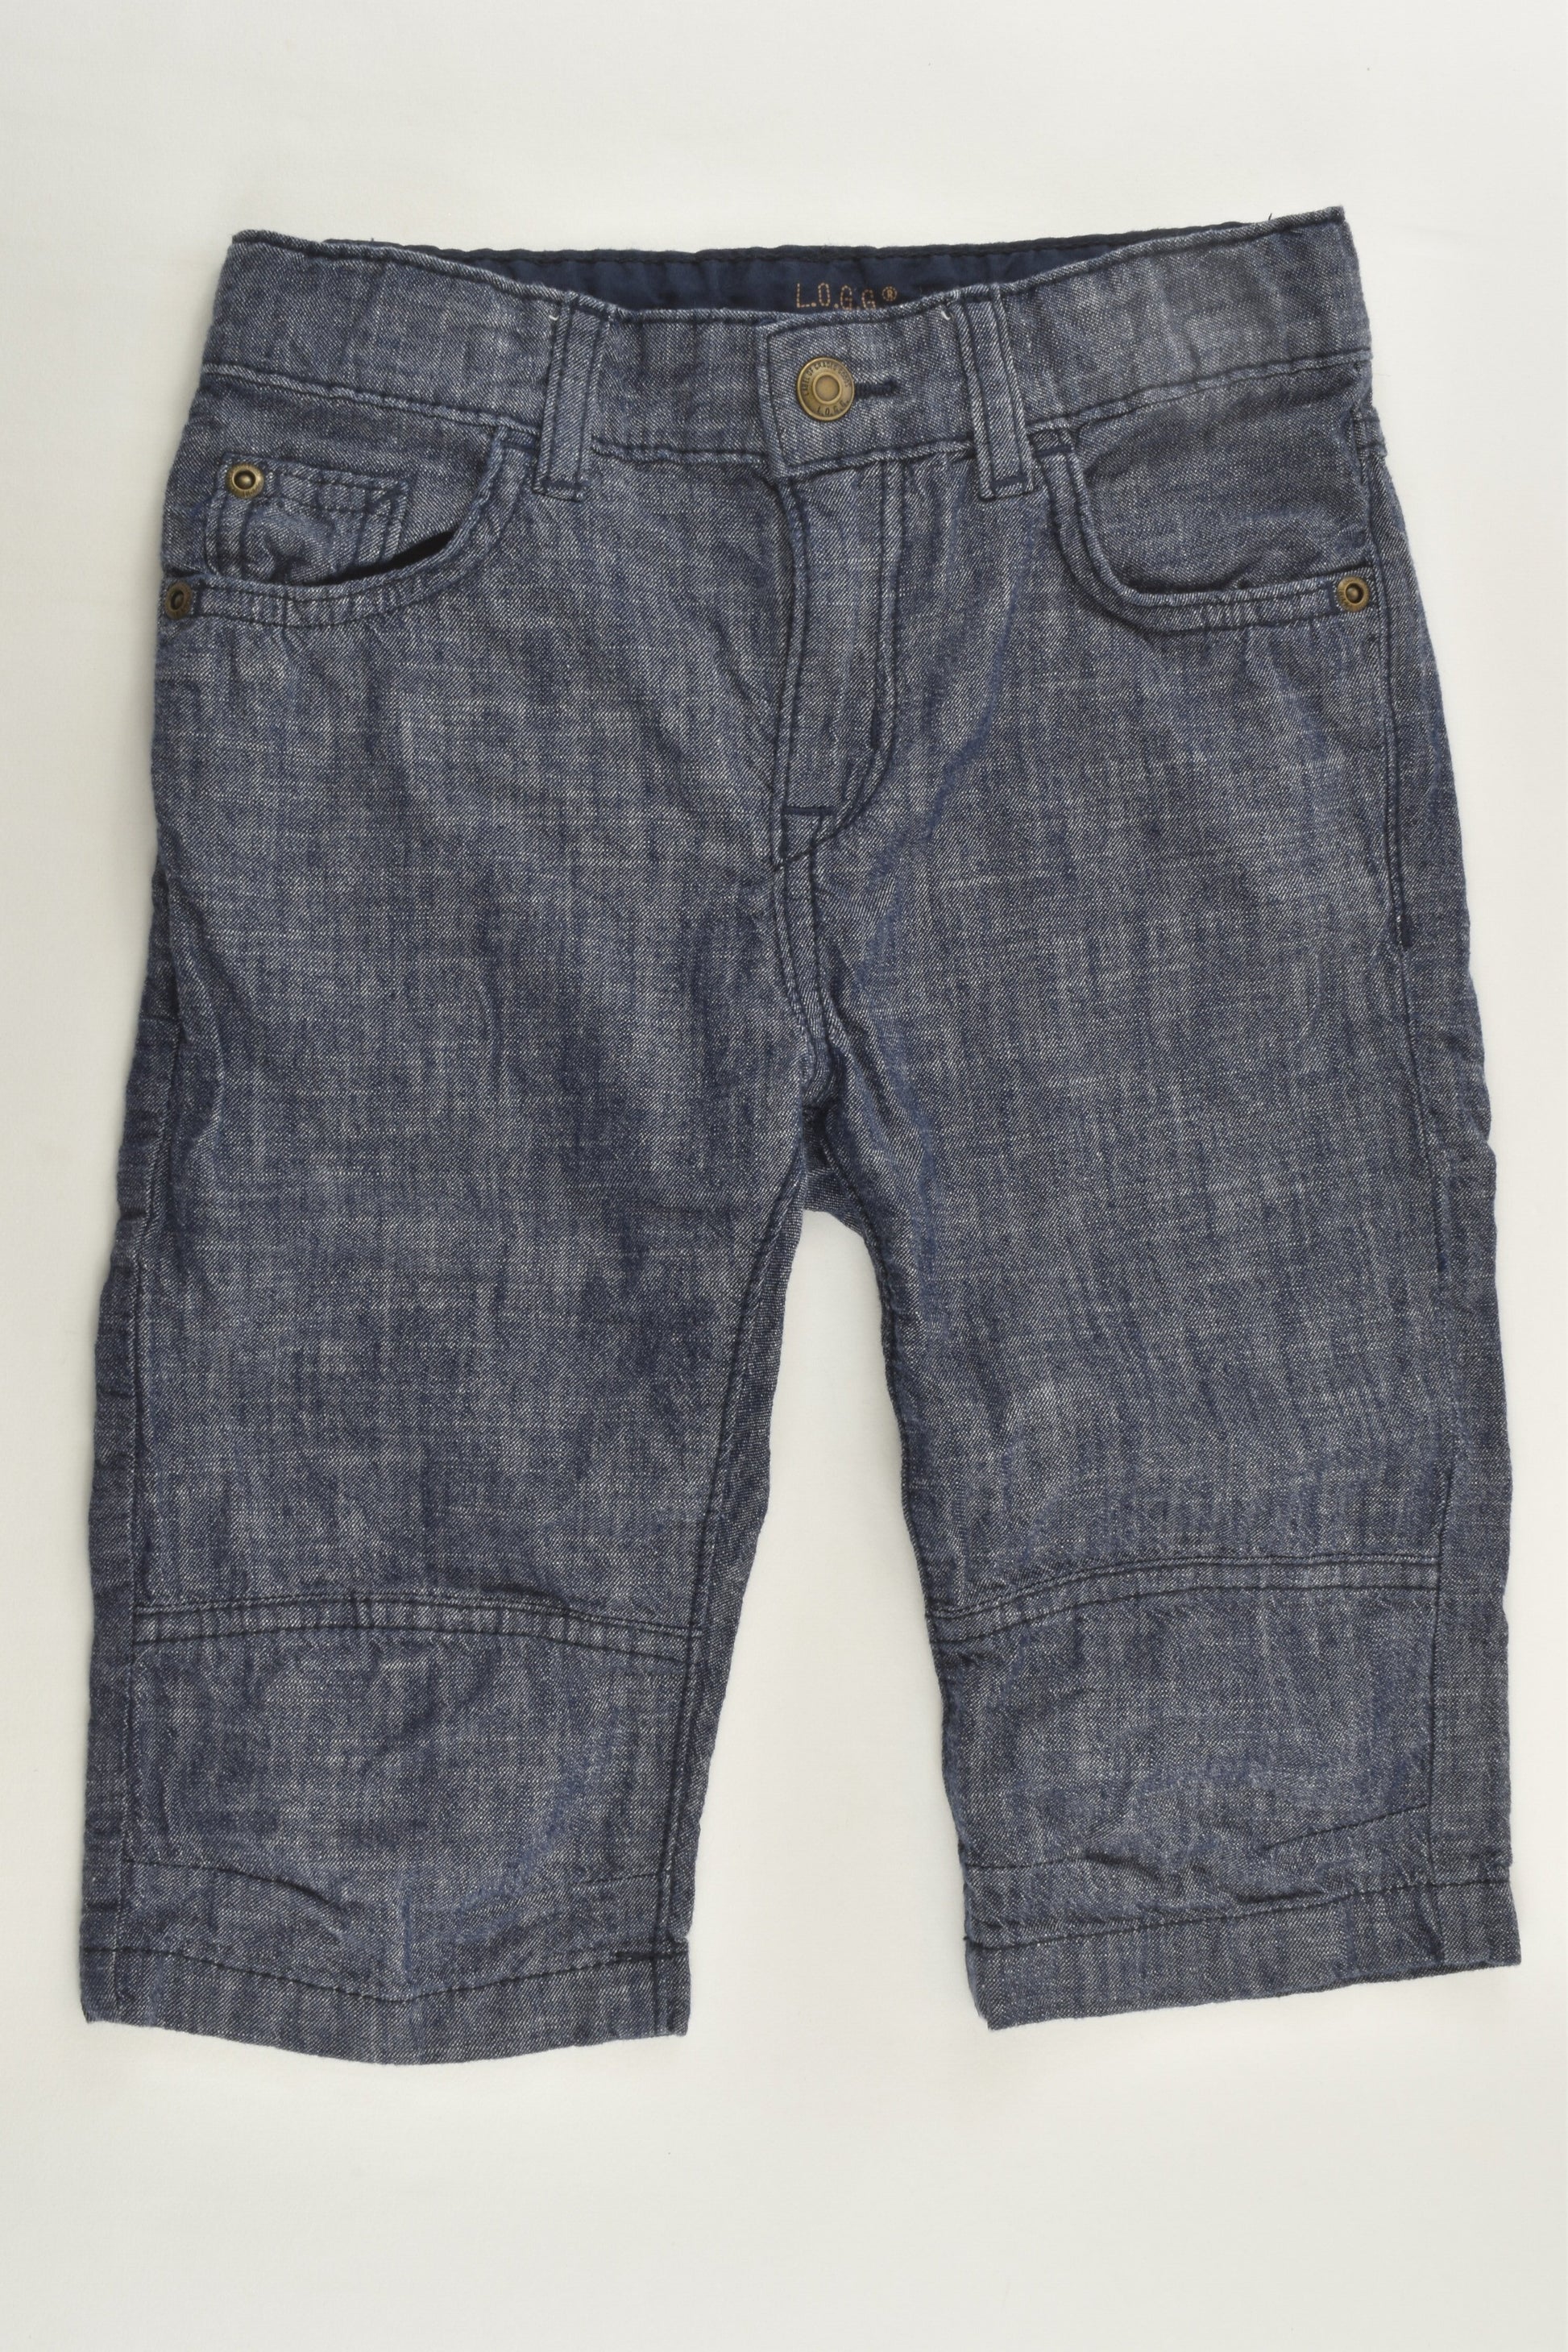 H&M Size 6 (116 cm) Lightweight Denim Shorts